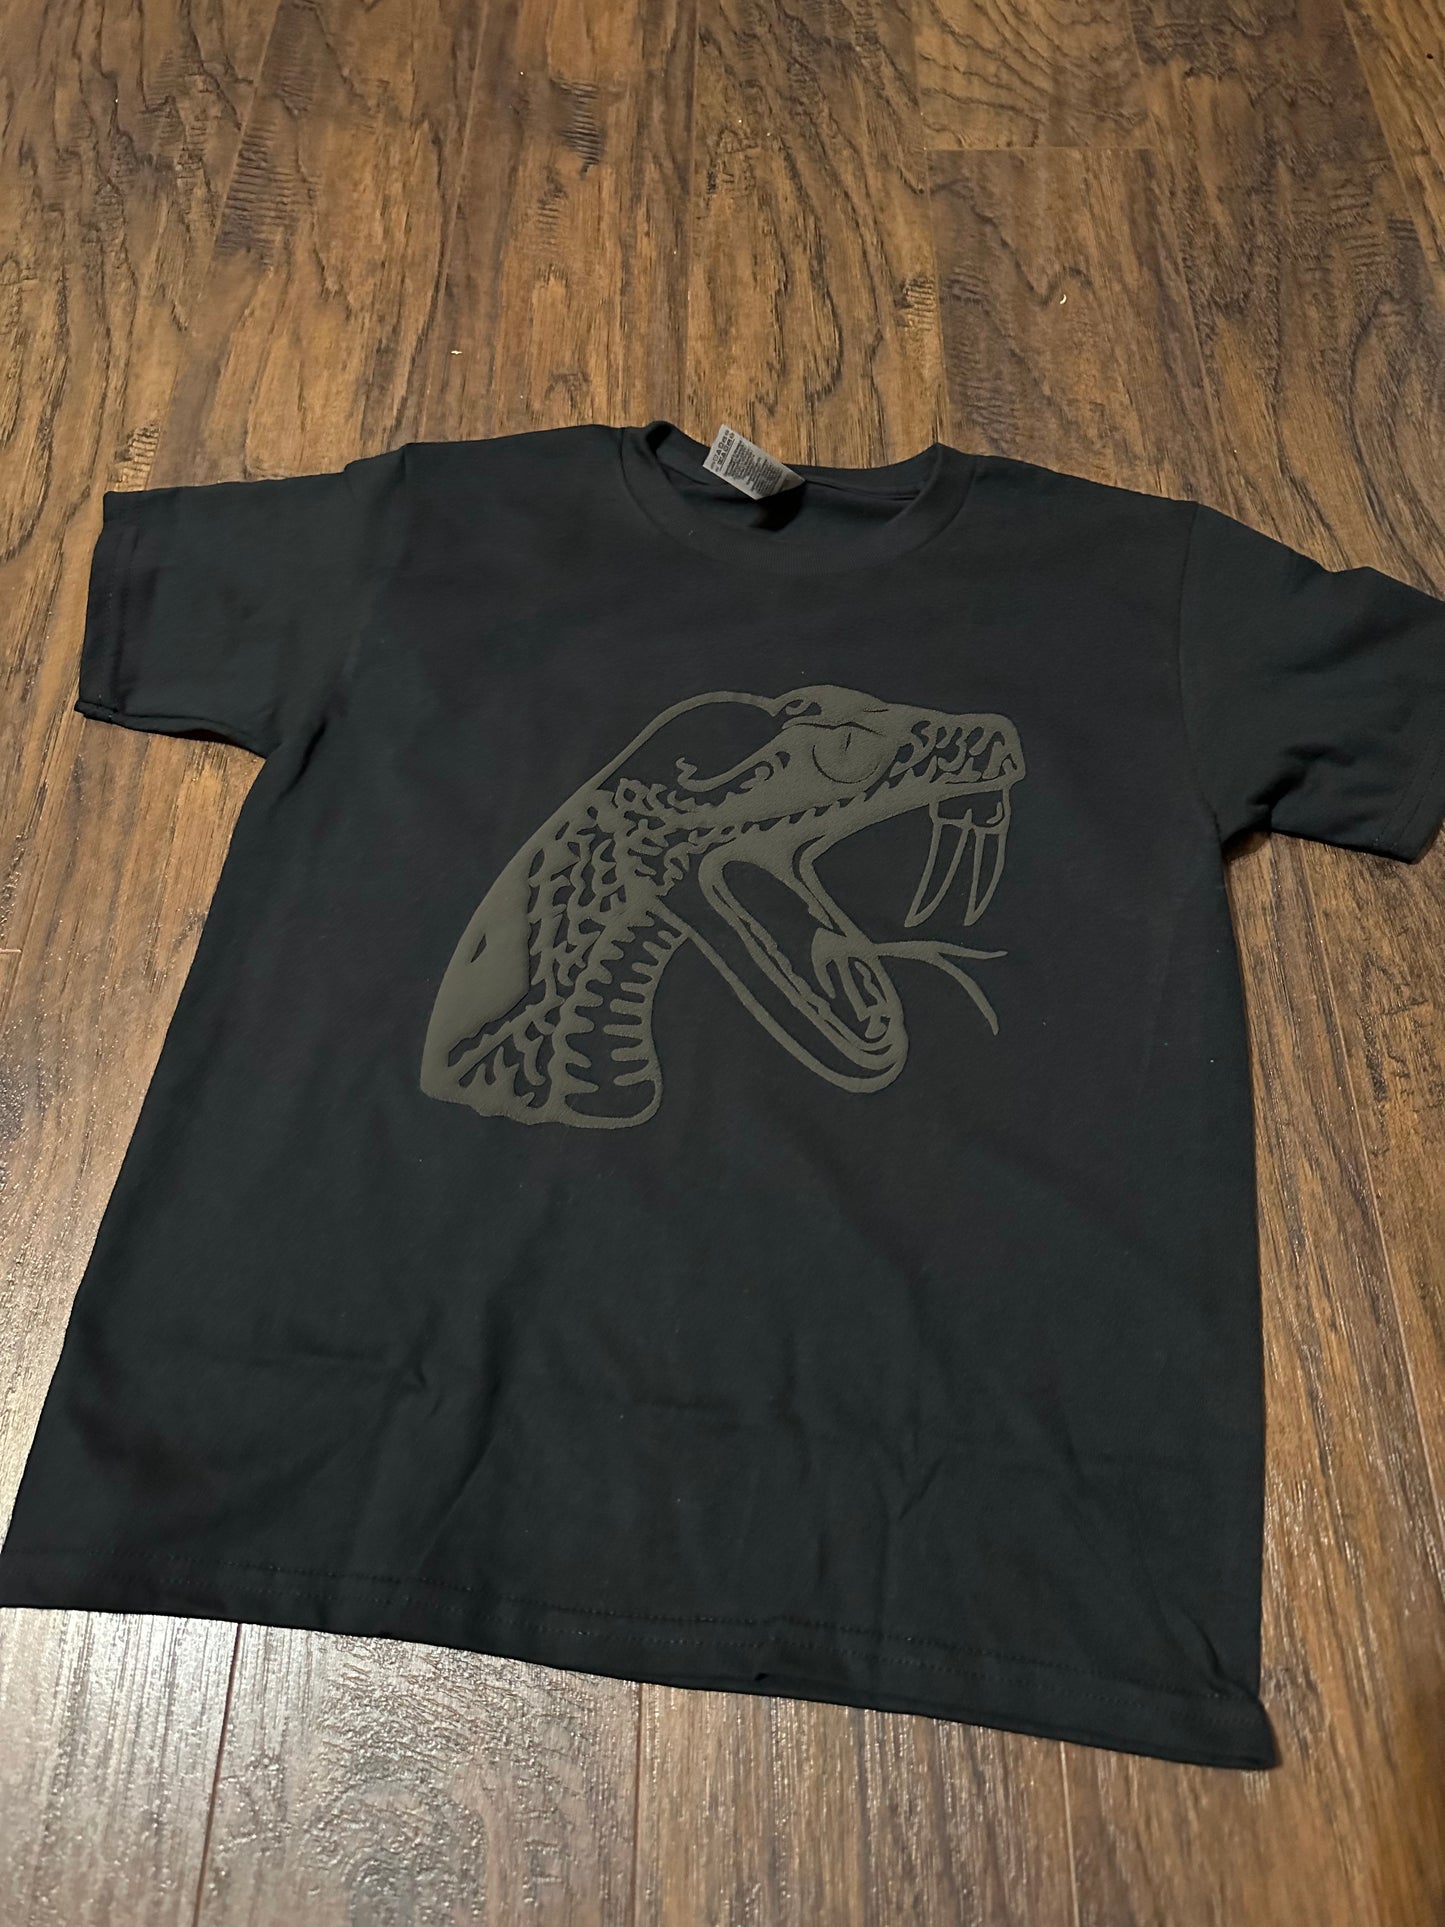 FAMU Rattler Puffed Graphic T-Shirt